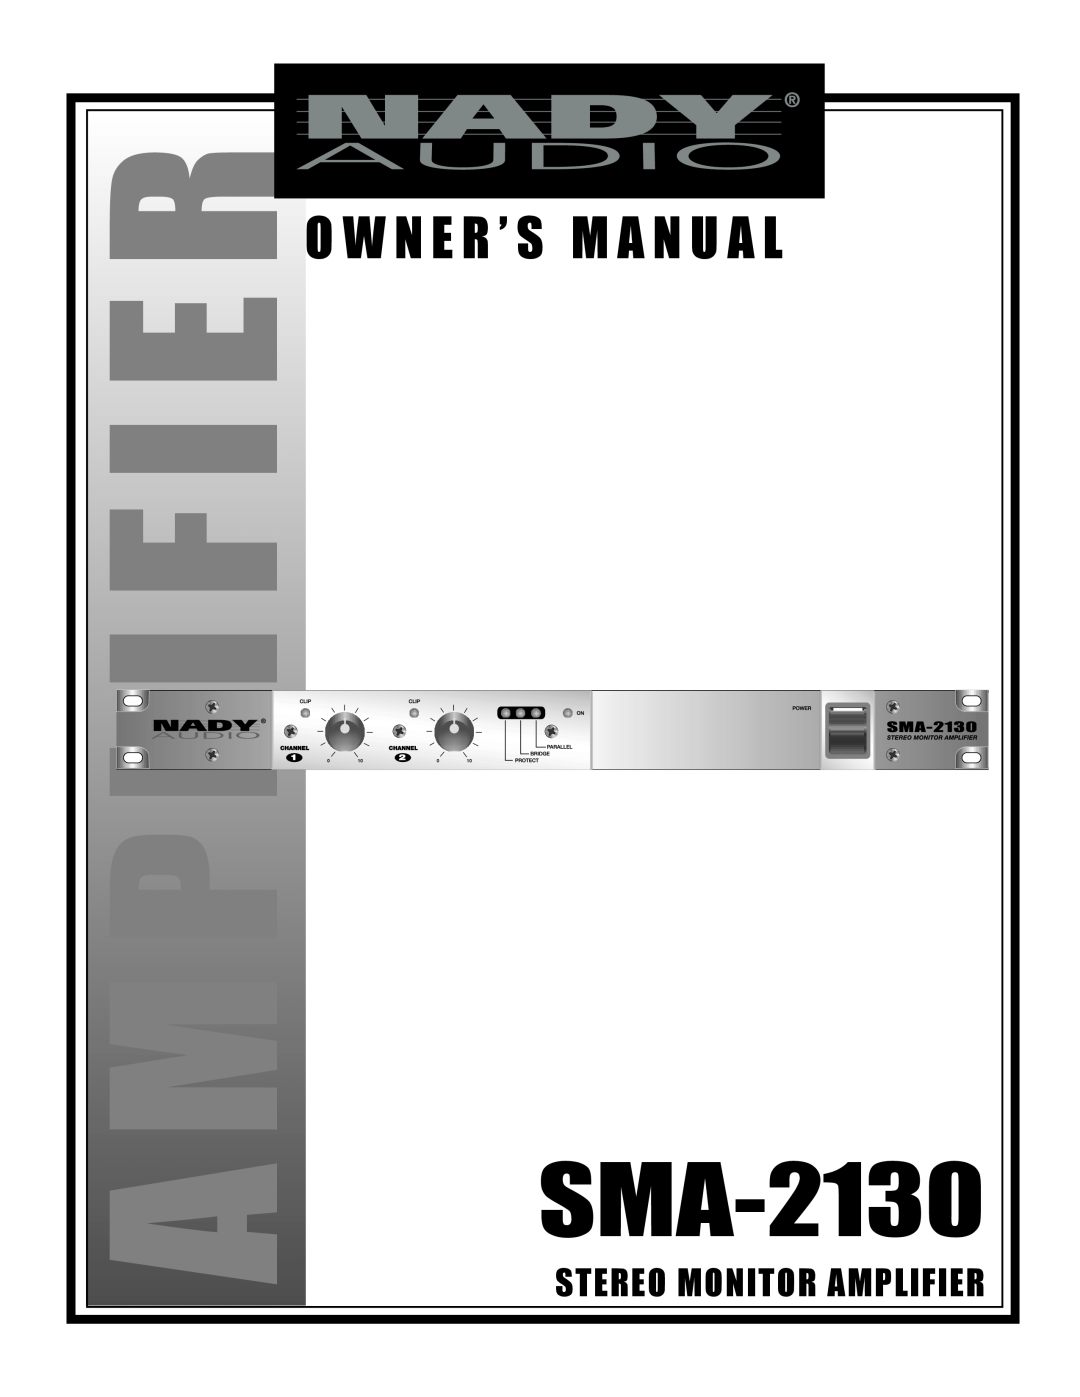 Nady Systems SMA-2130 owner manual Mpl I F I E, Ro W N E R ’ S M A N U A L, Stereo Monitor Amplifier 